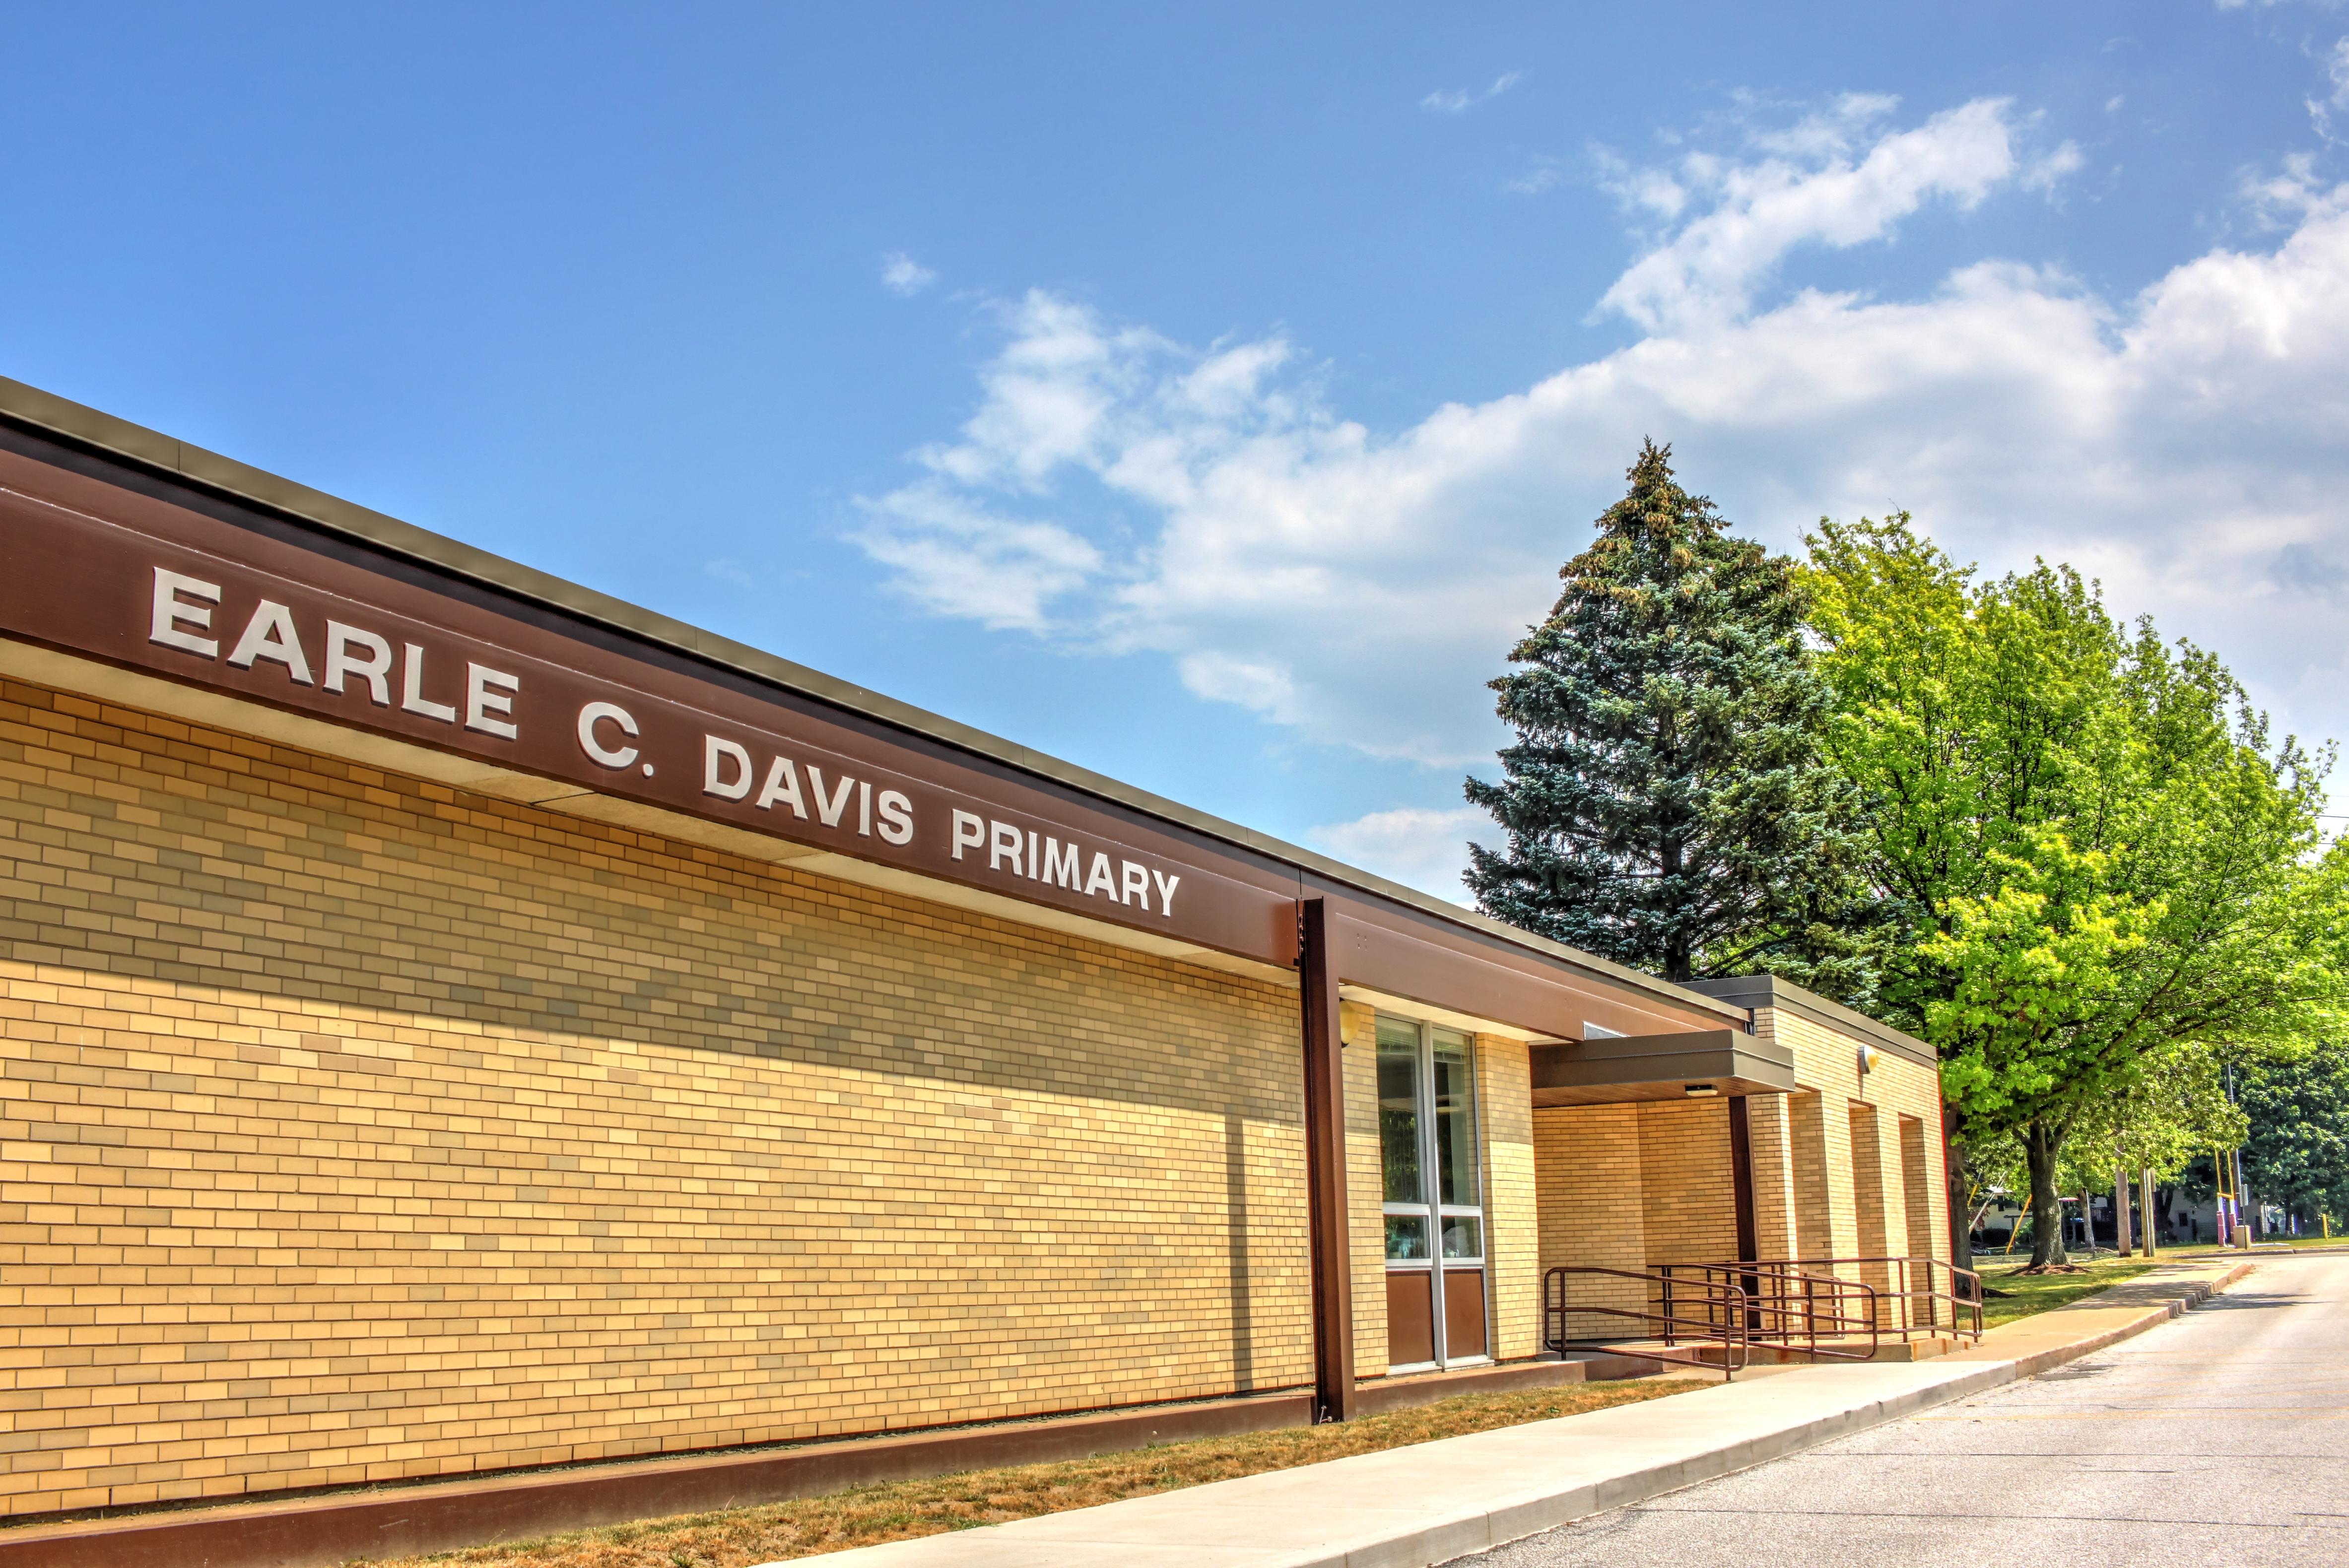 Outside view of the Earle C. Davis School